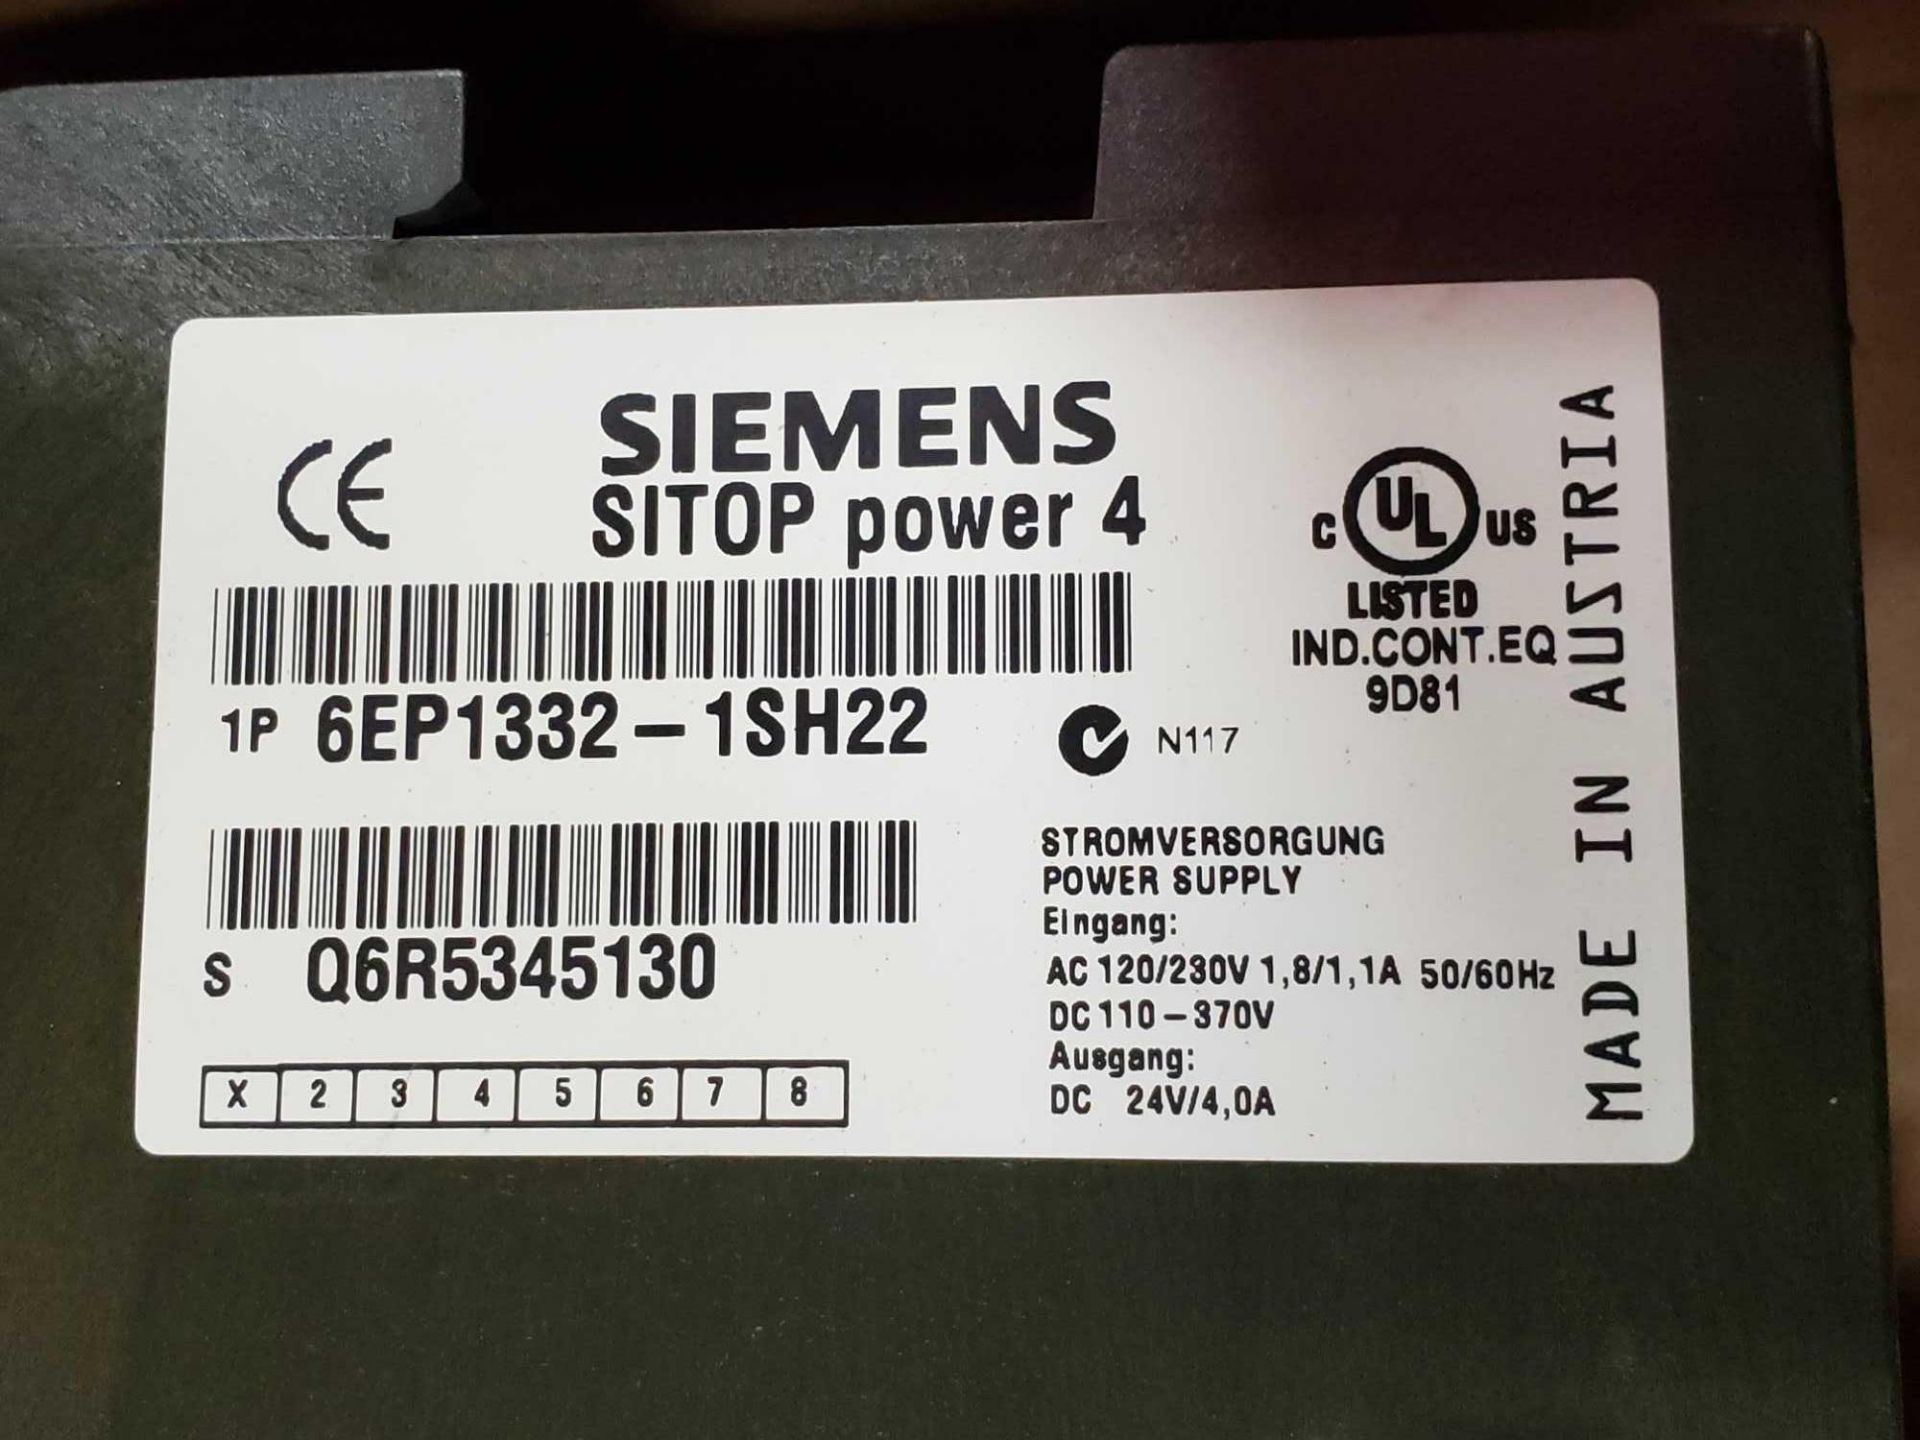 Siemens SITOP power 4 power supply model 6EP1332-1SH22. - Image 2 of 2